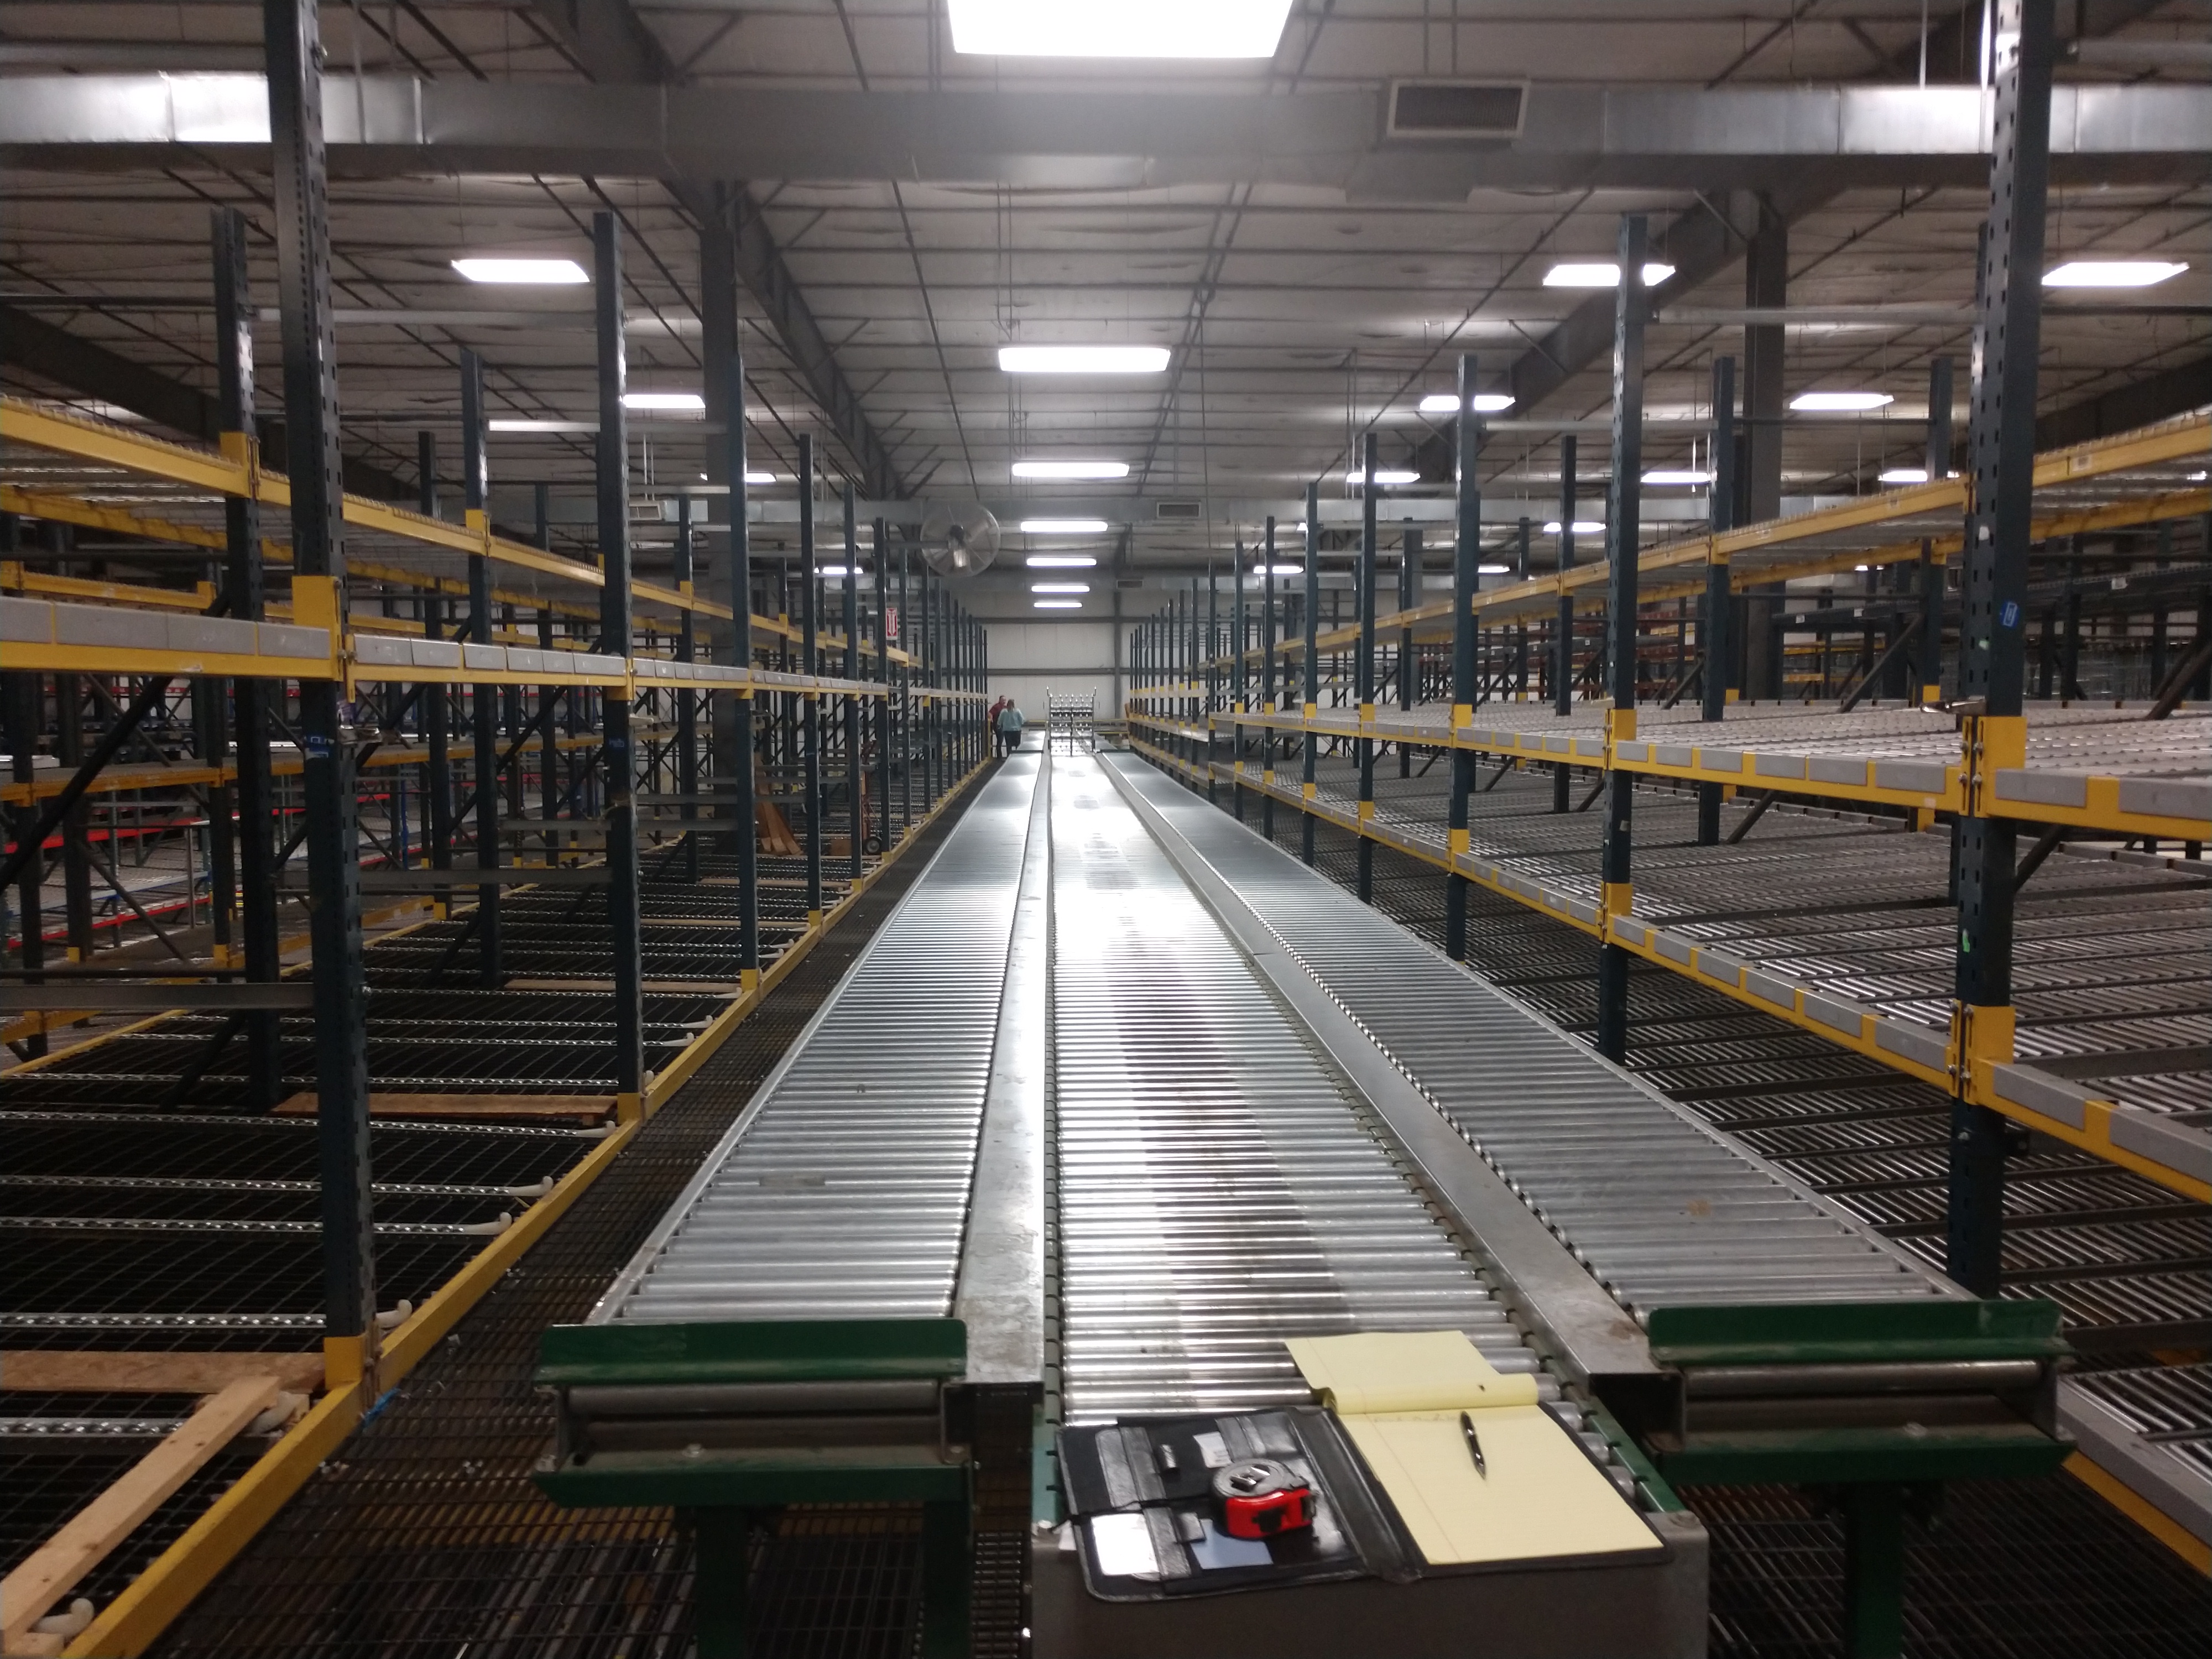 conveyor and storage shelves